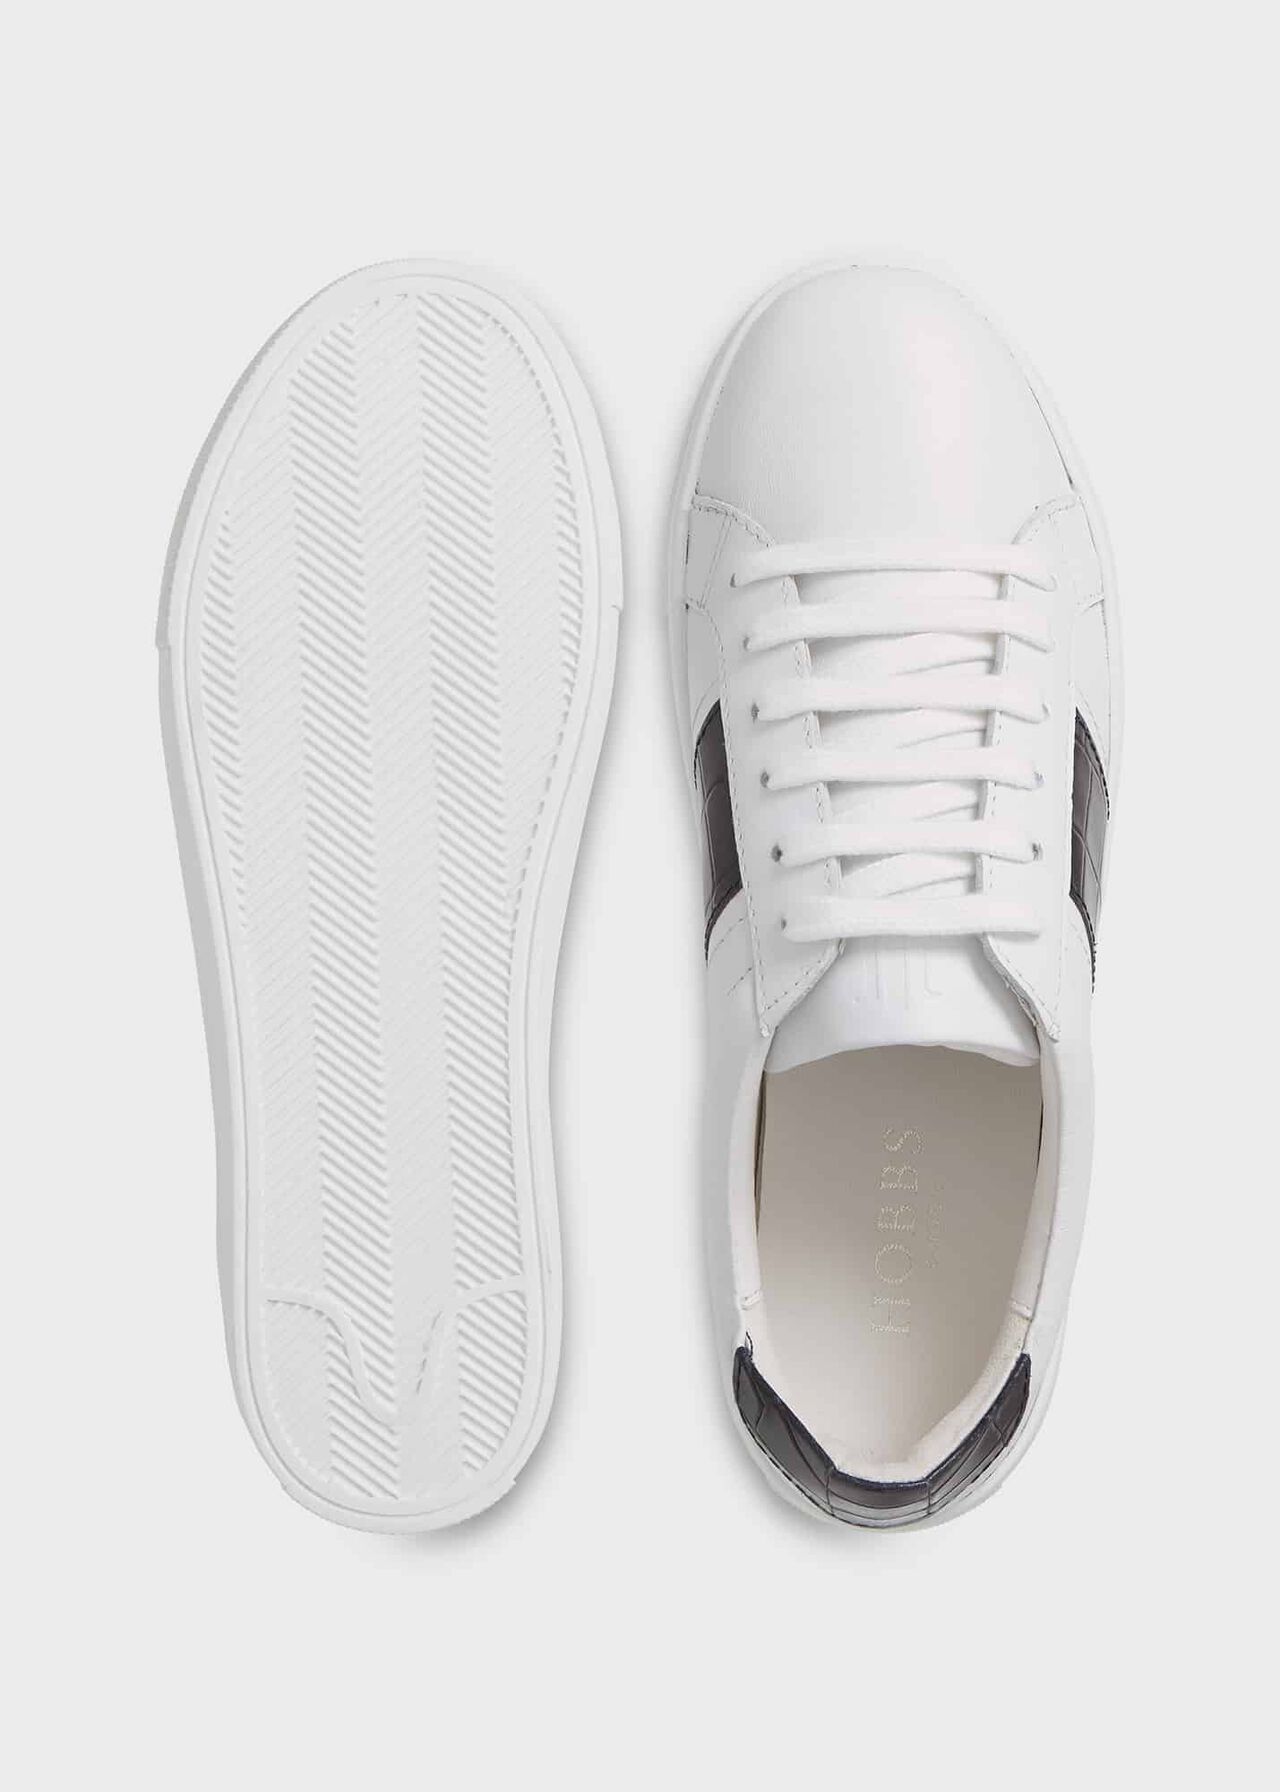 Victoria Sneakers, White, hi-res